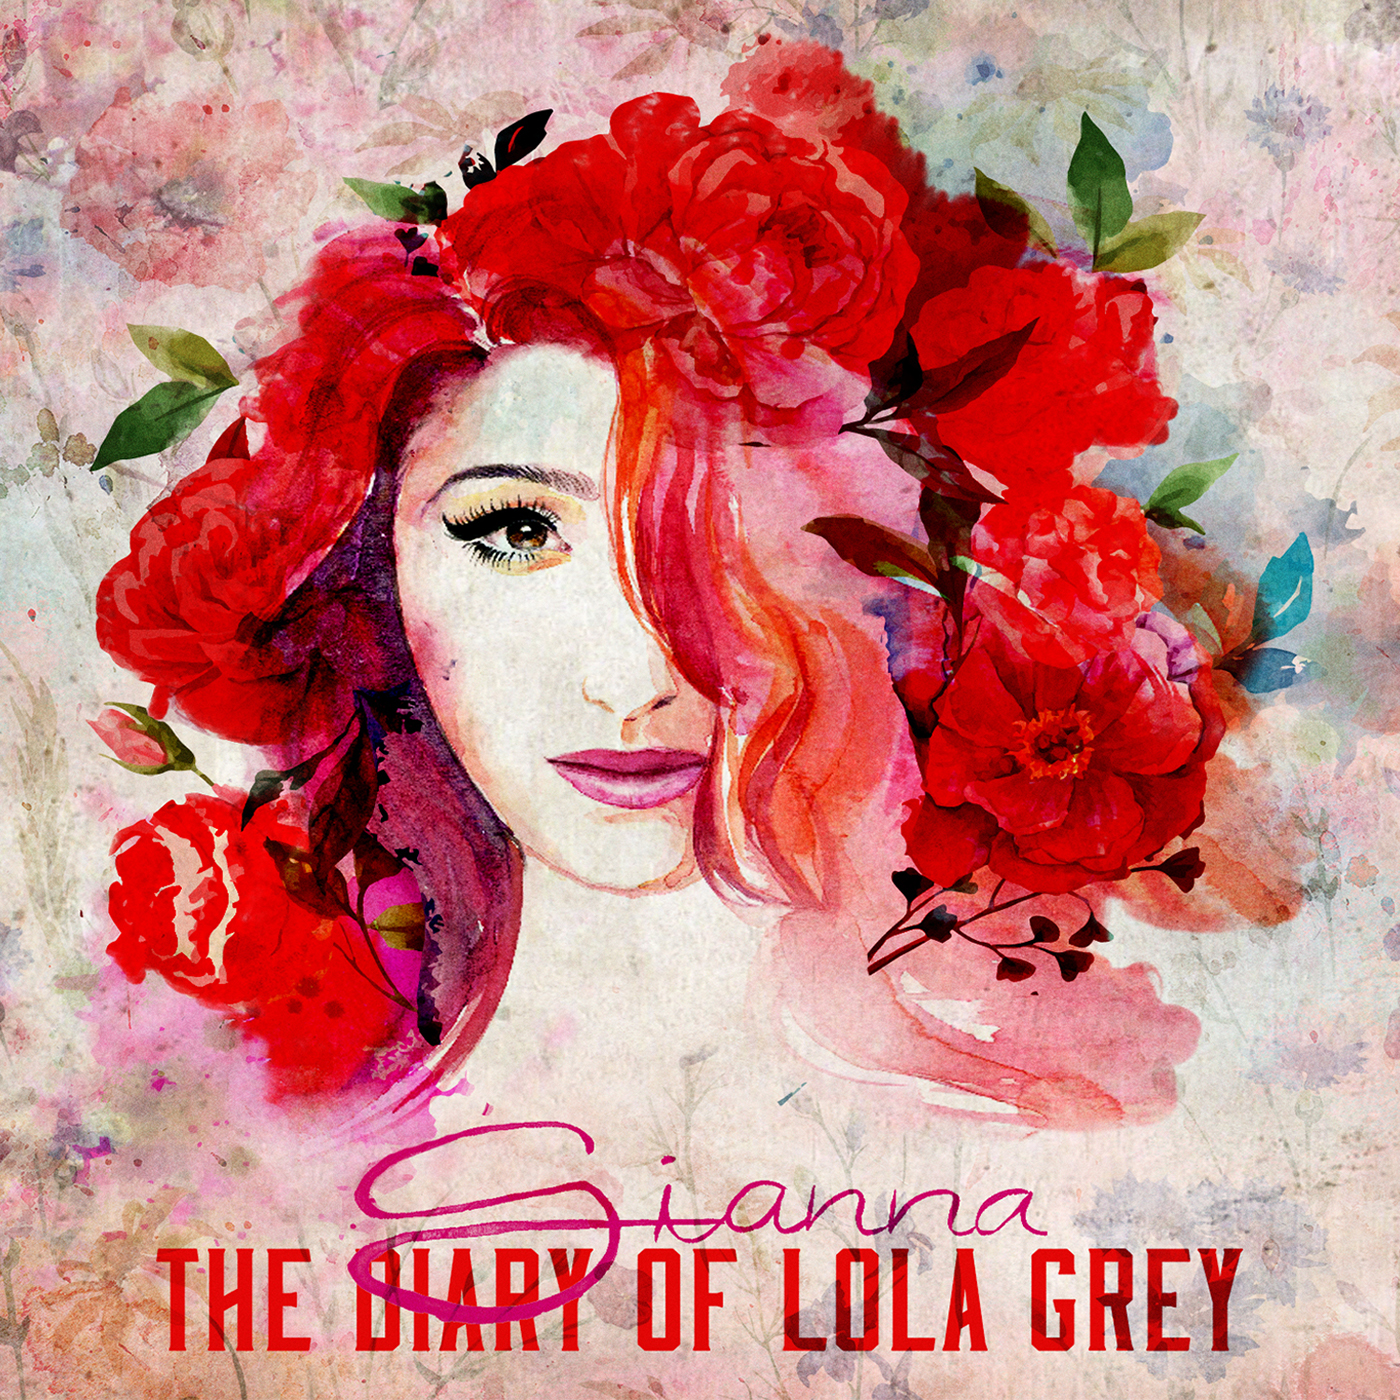 gianna The Diary Of lola grey draw Album cover Flowers photo manipulation mixed media